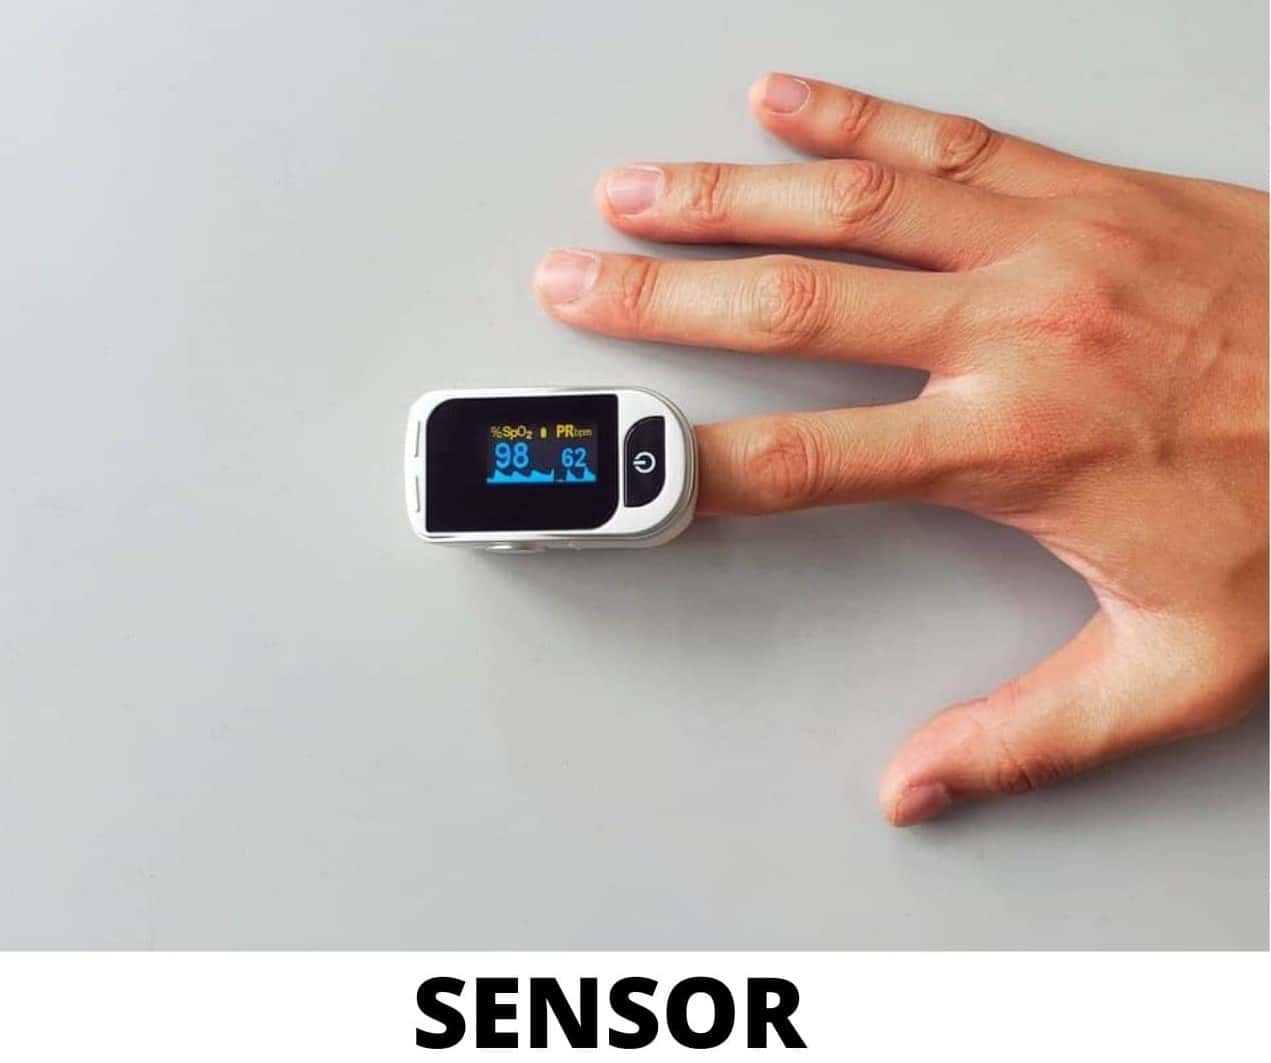 sensors featured